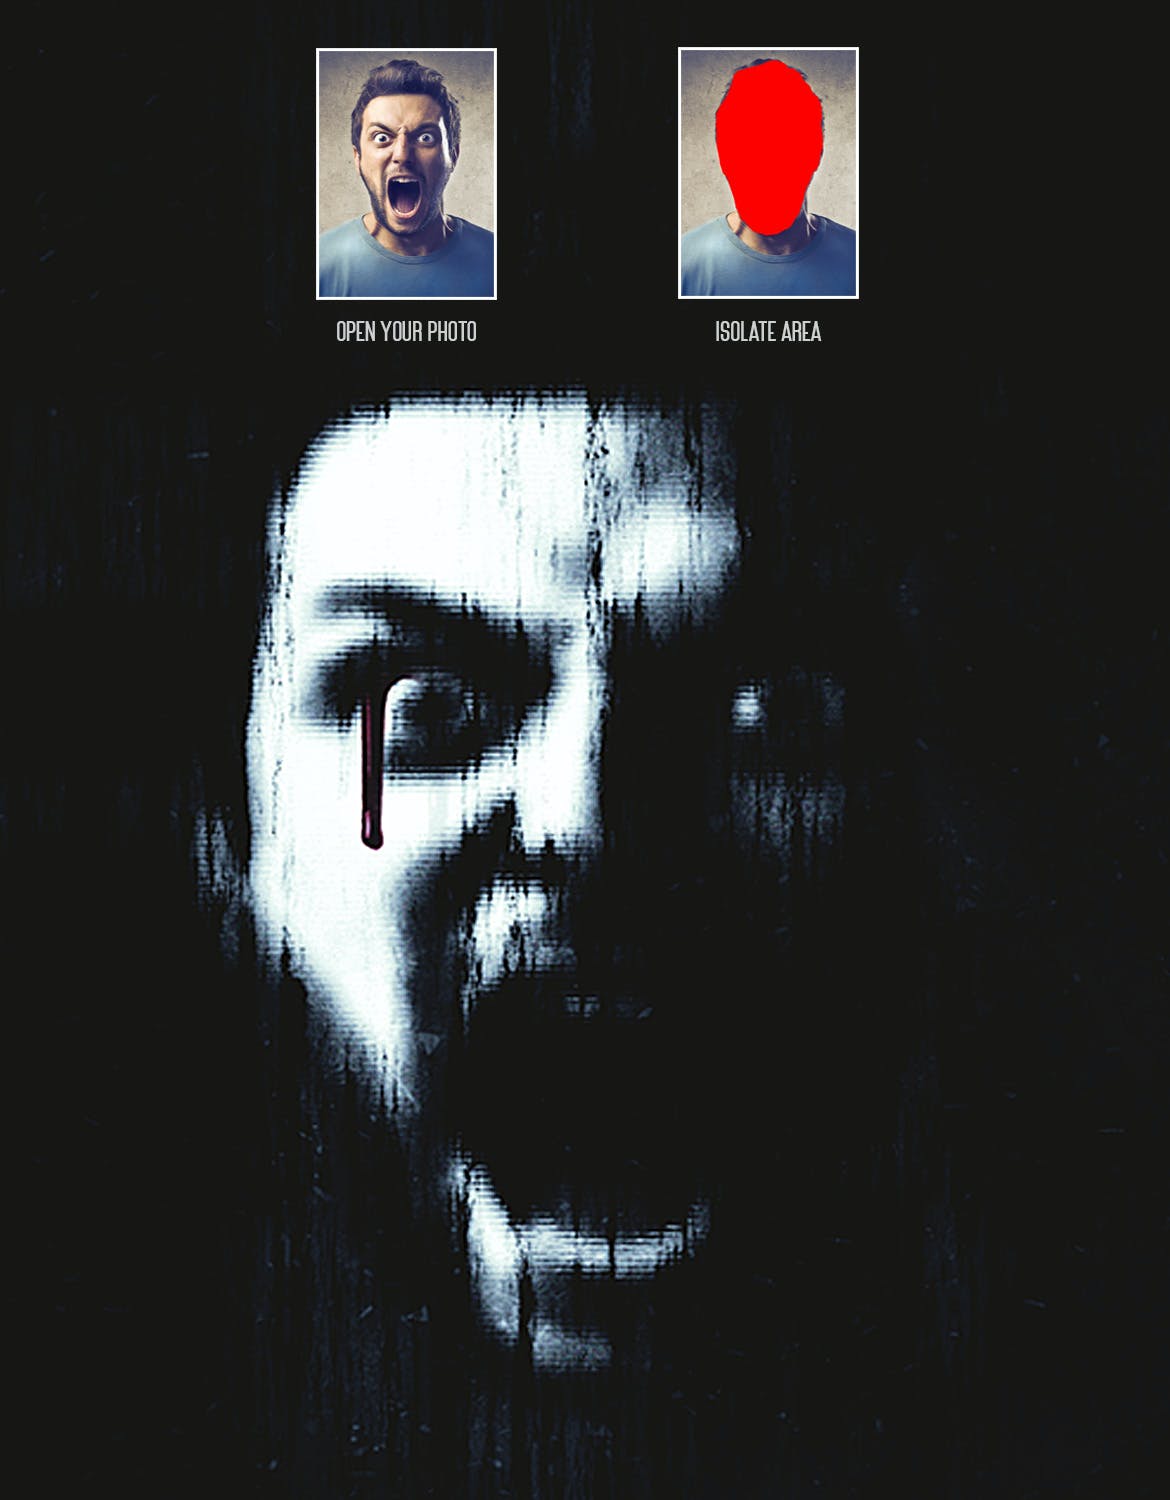 恐怖鬼脸照片处理效果PS动作模板 Ghost Face – Photoshop Action 插件预设 第3张